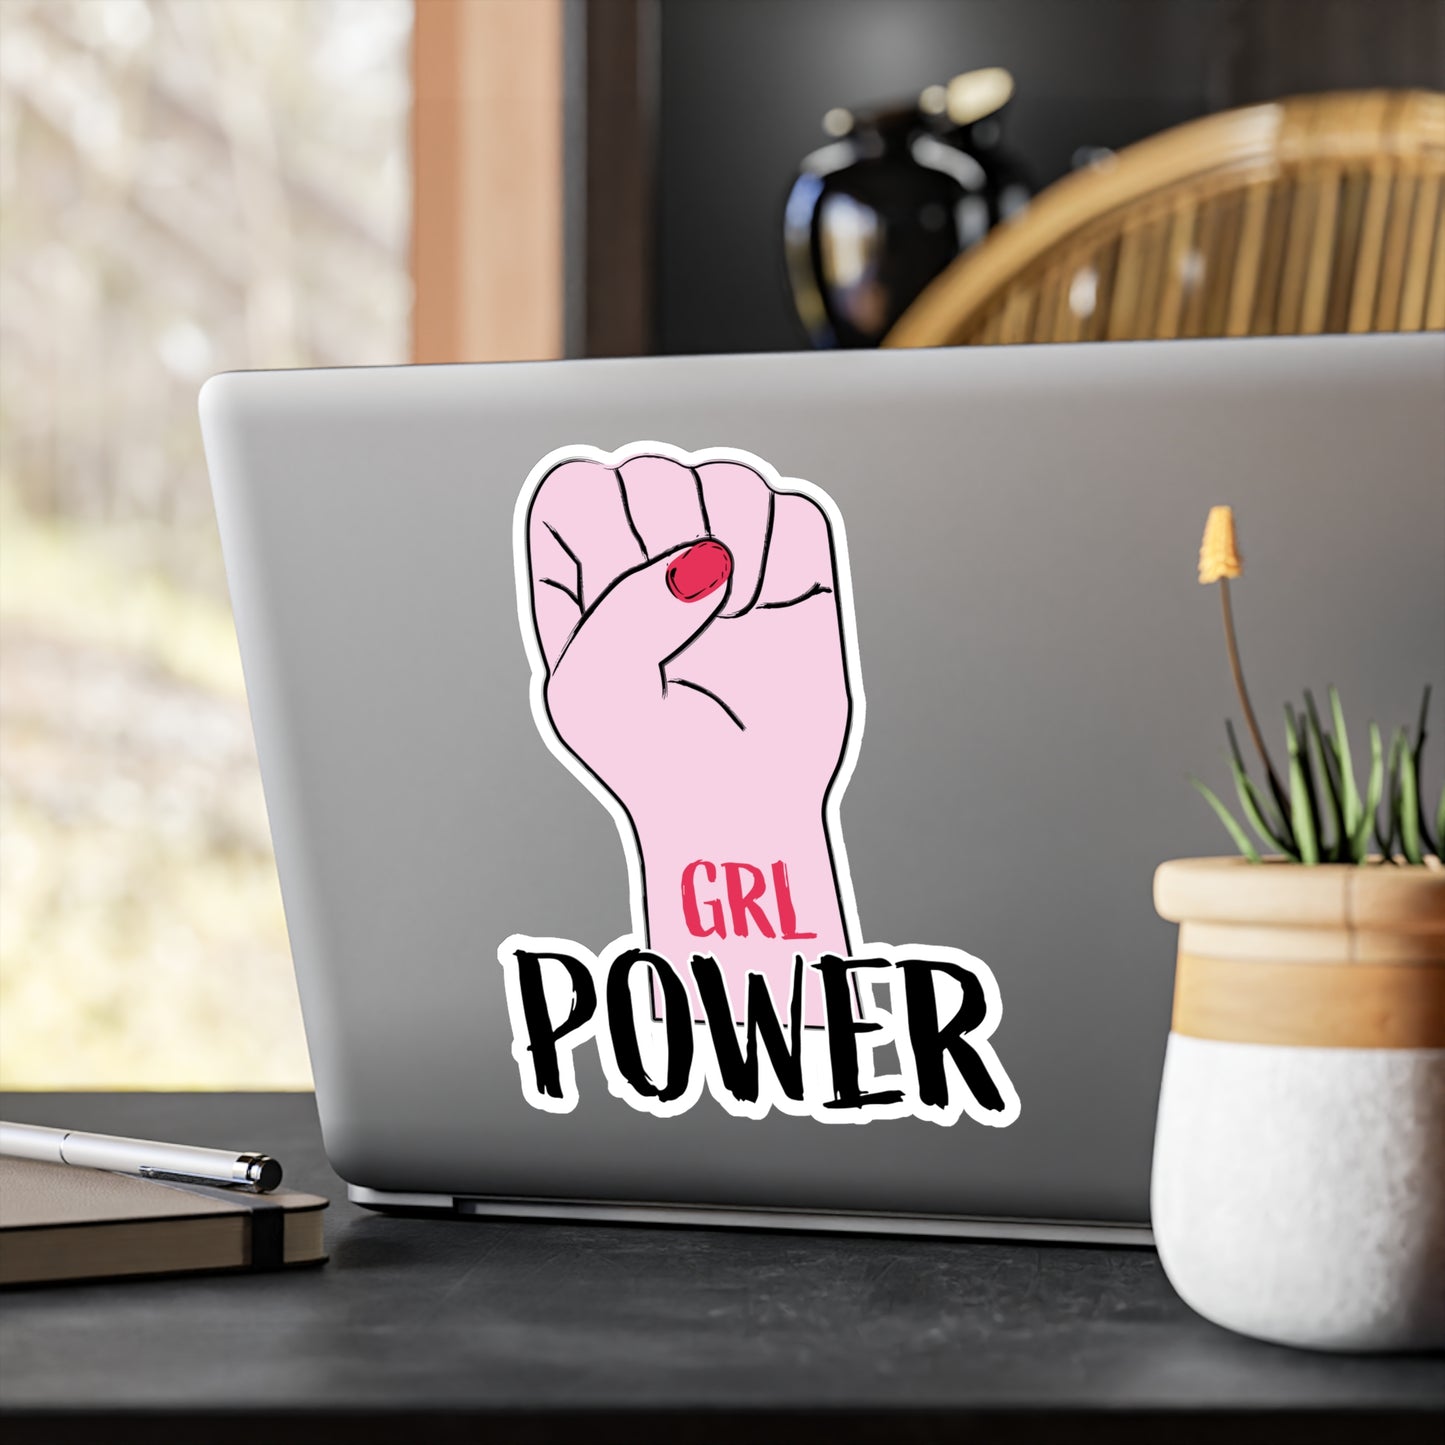 Grl Power Sticker - Motivational Treats